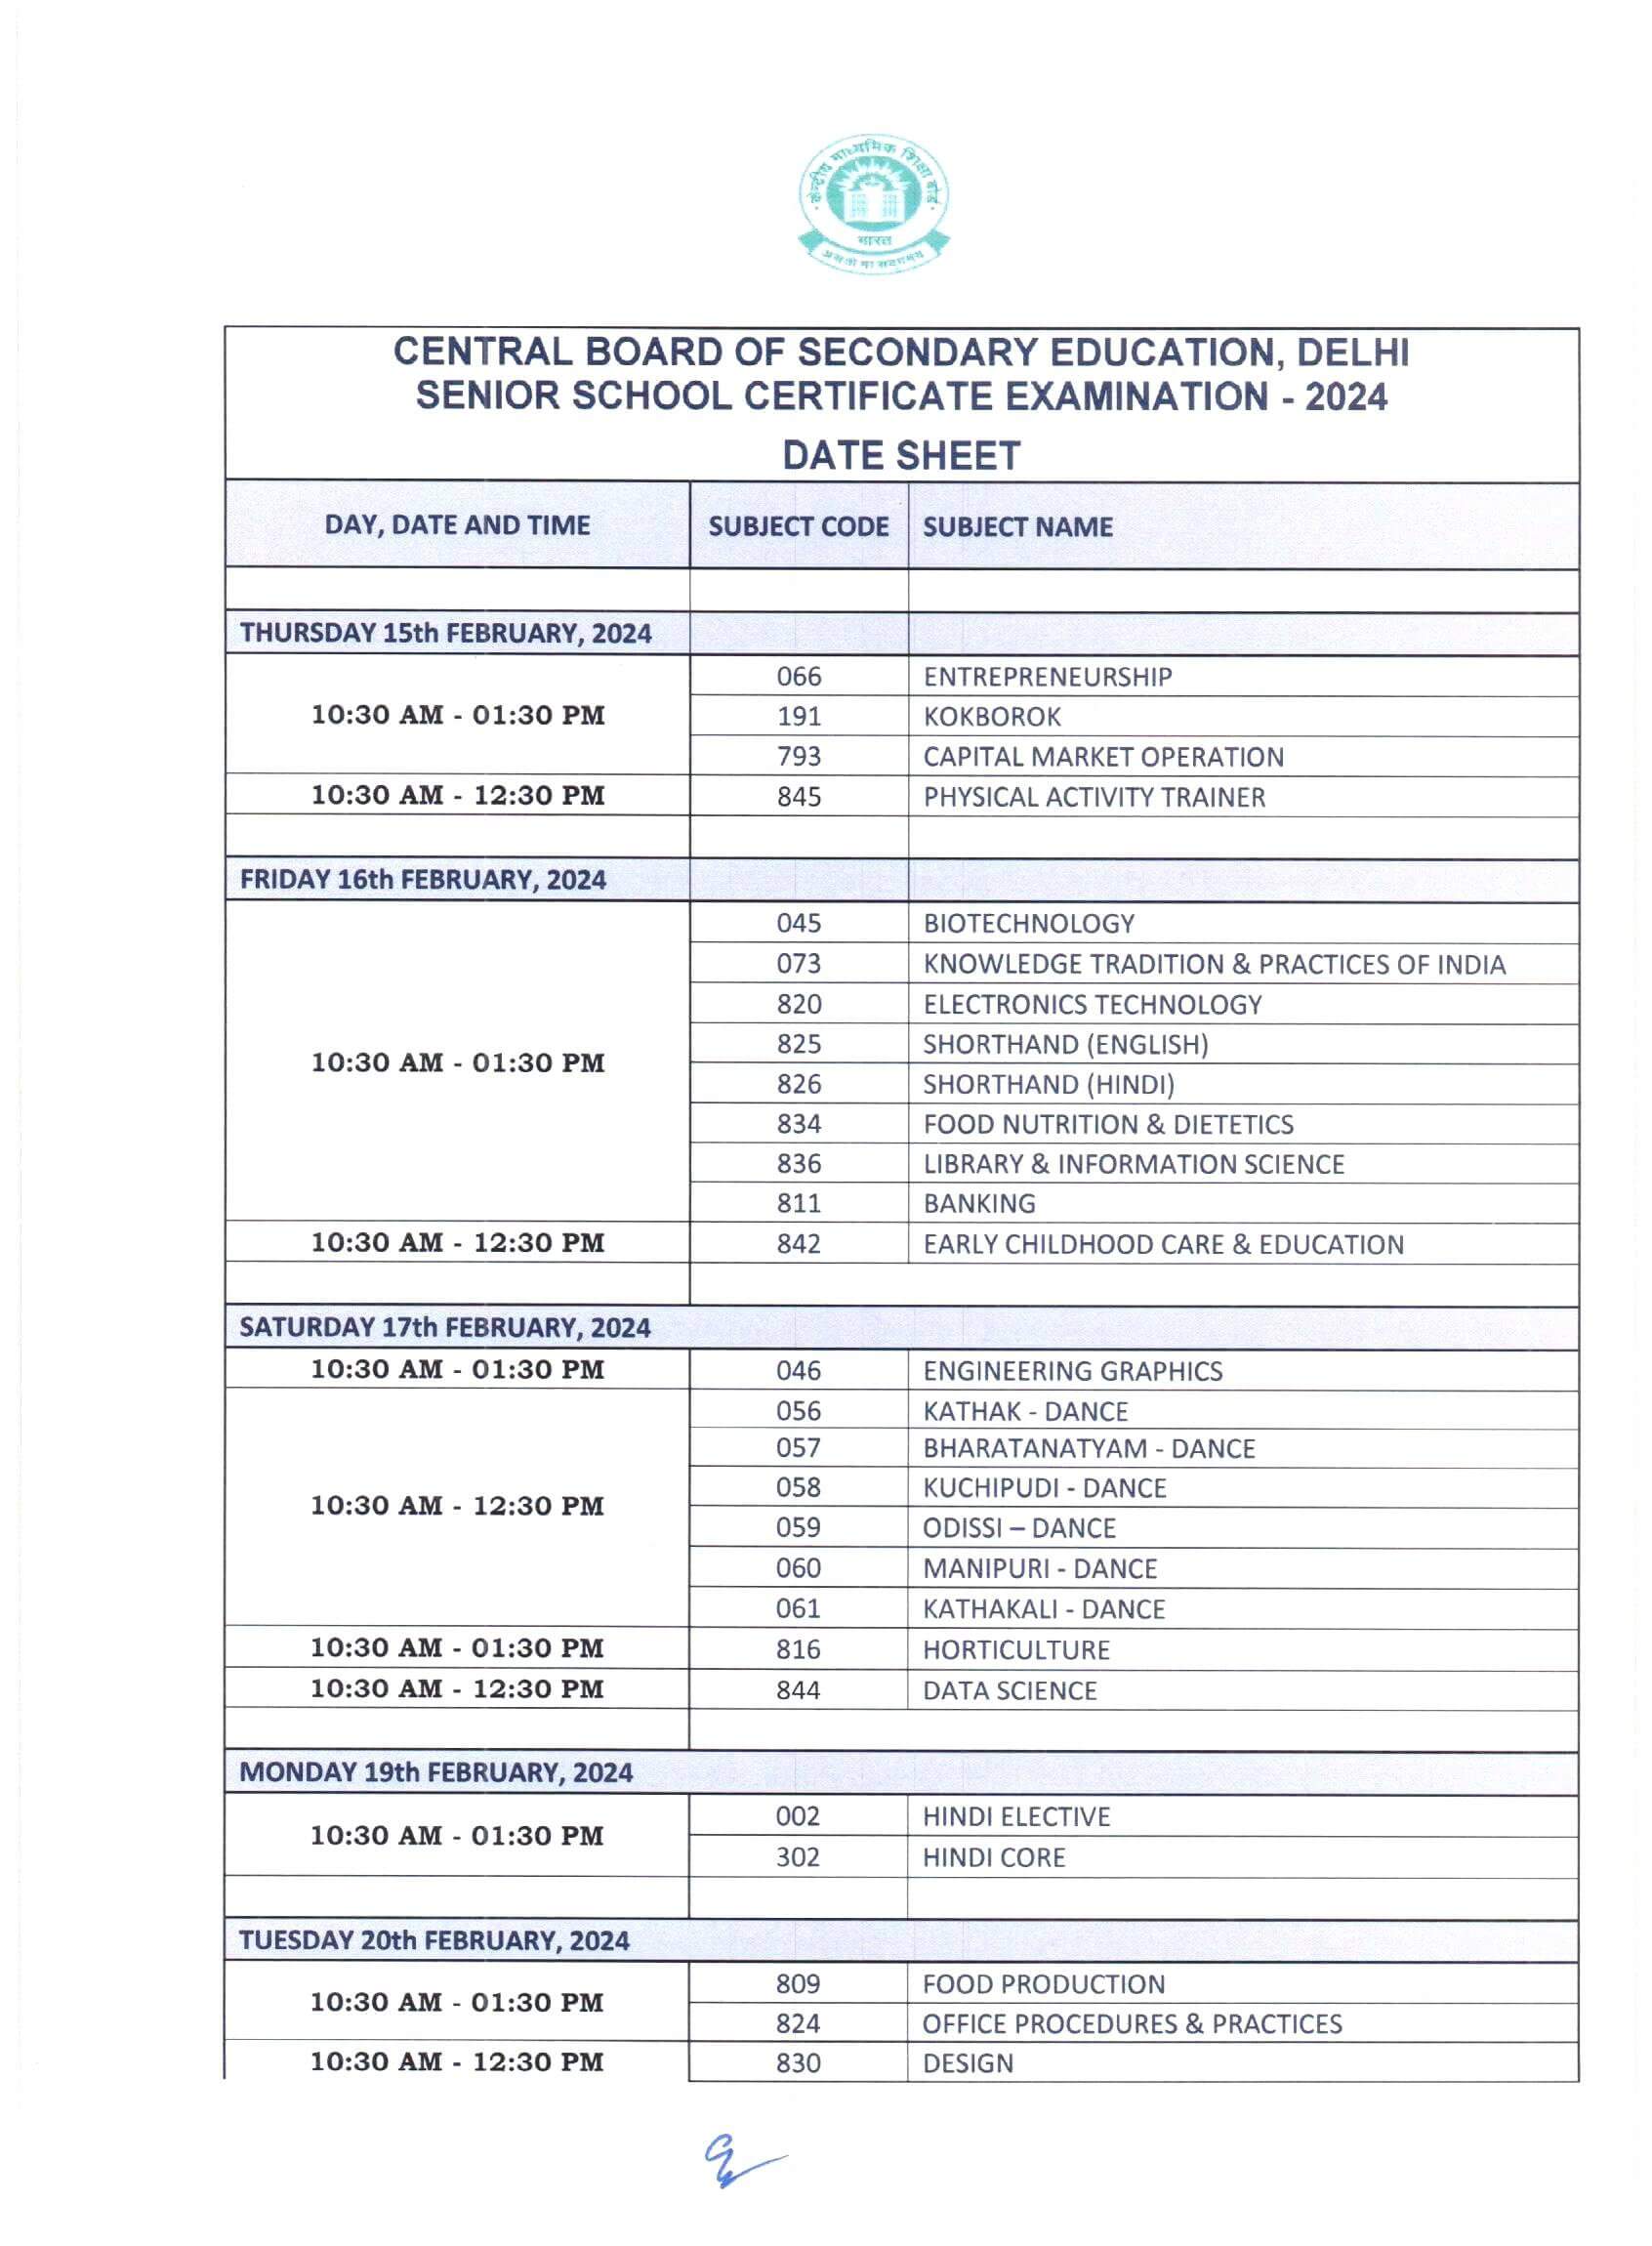 CBSE Date Sheet for Class 12 Board Exams 2024